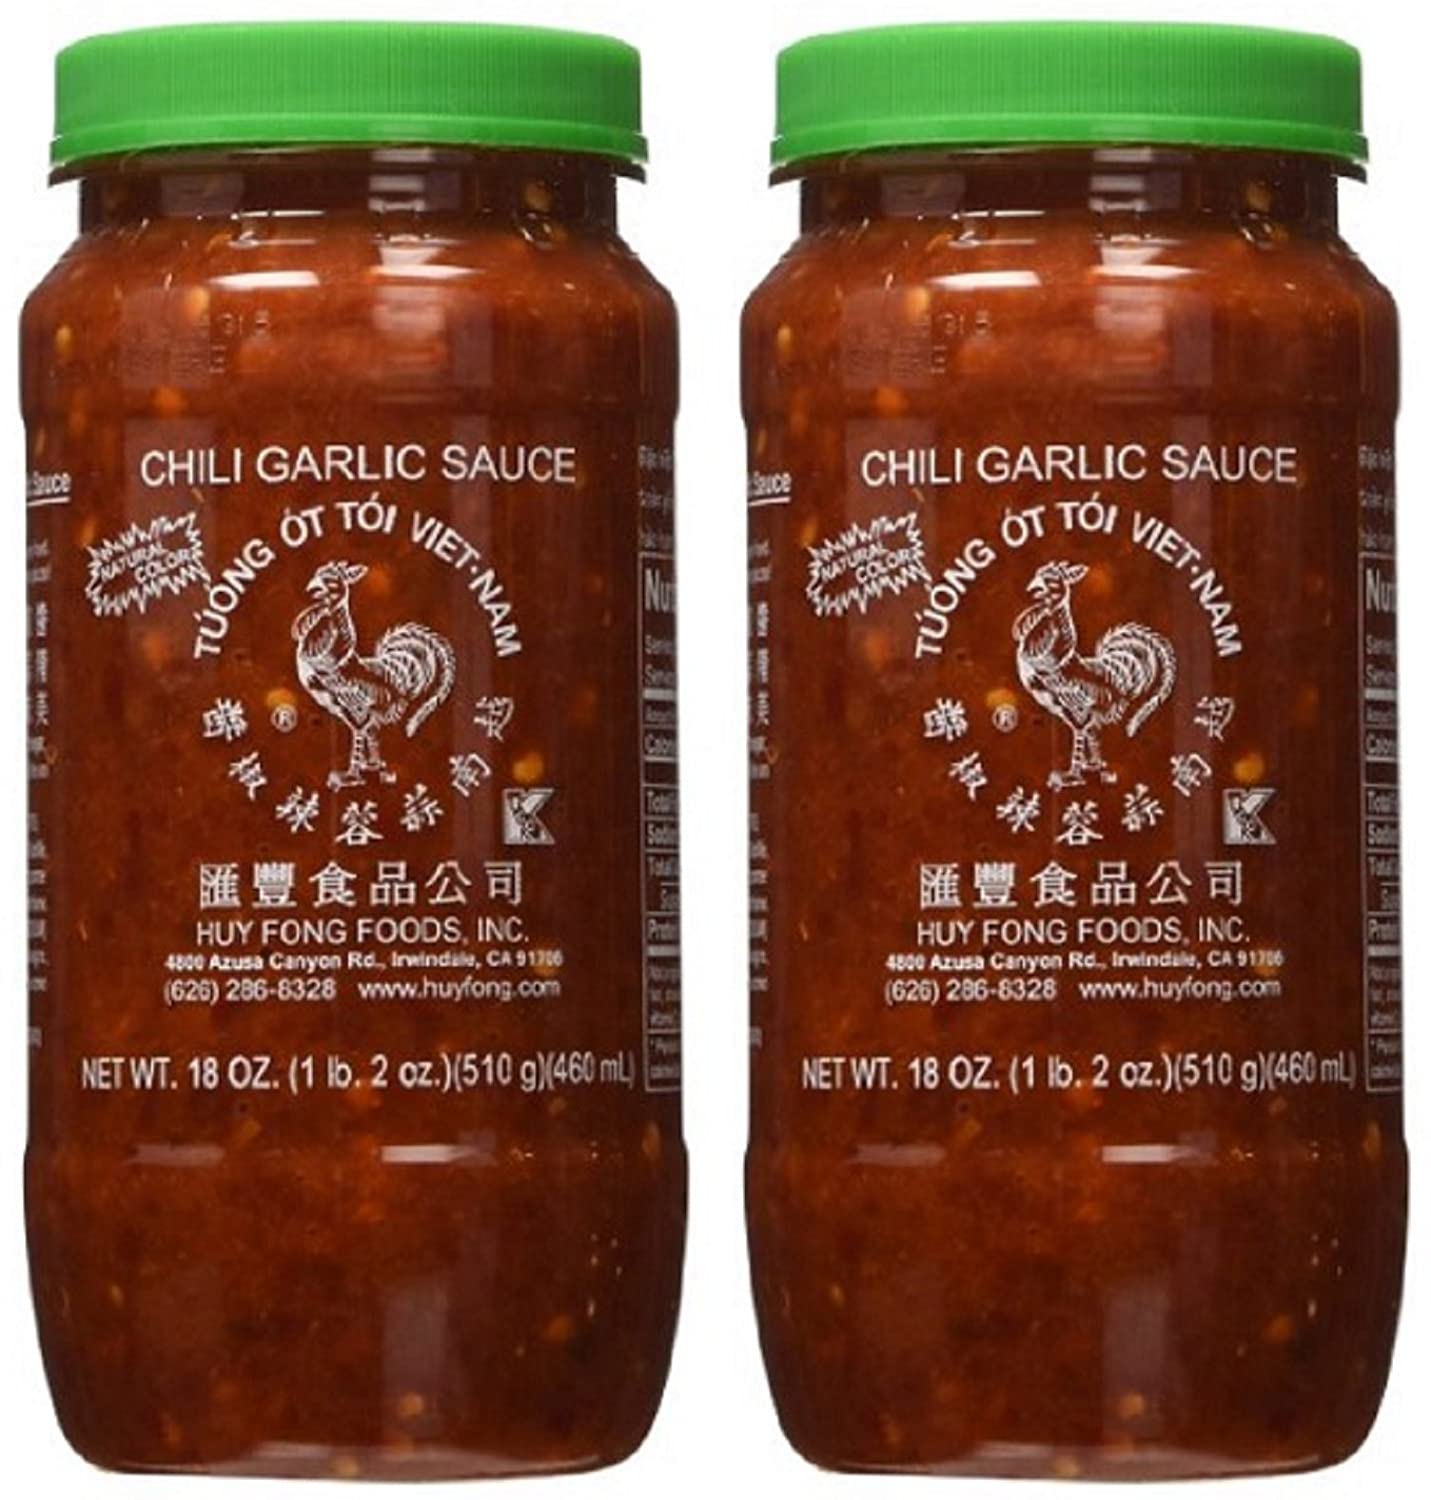 Huy Fong Chili Garlic Sauce, 18 Oz 2 pack